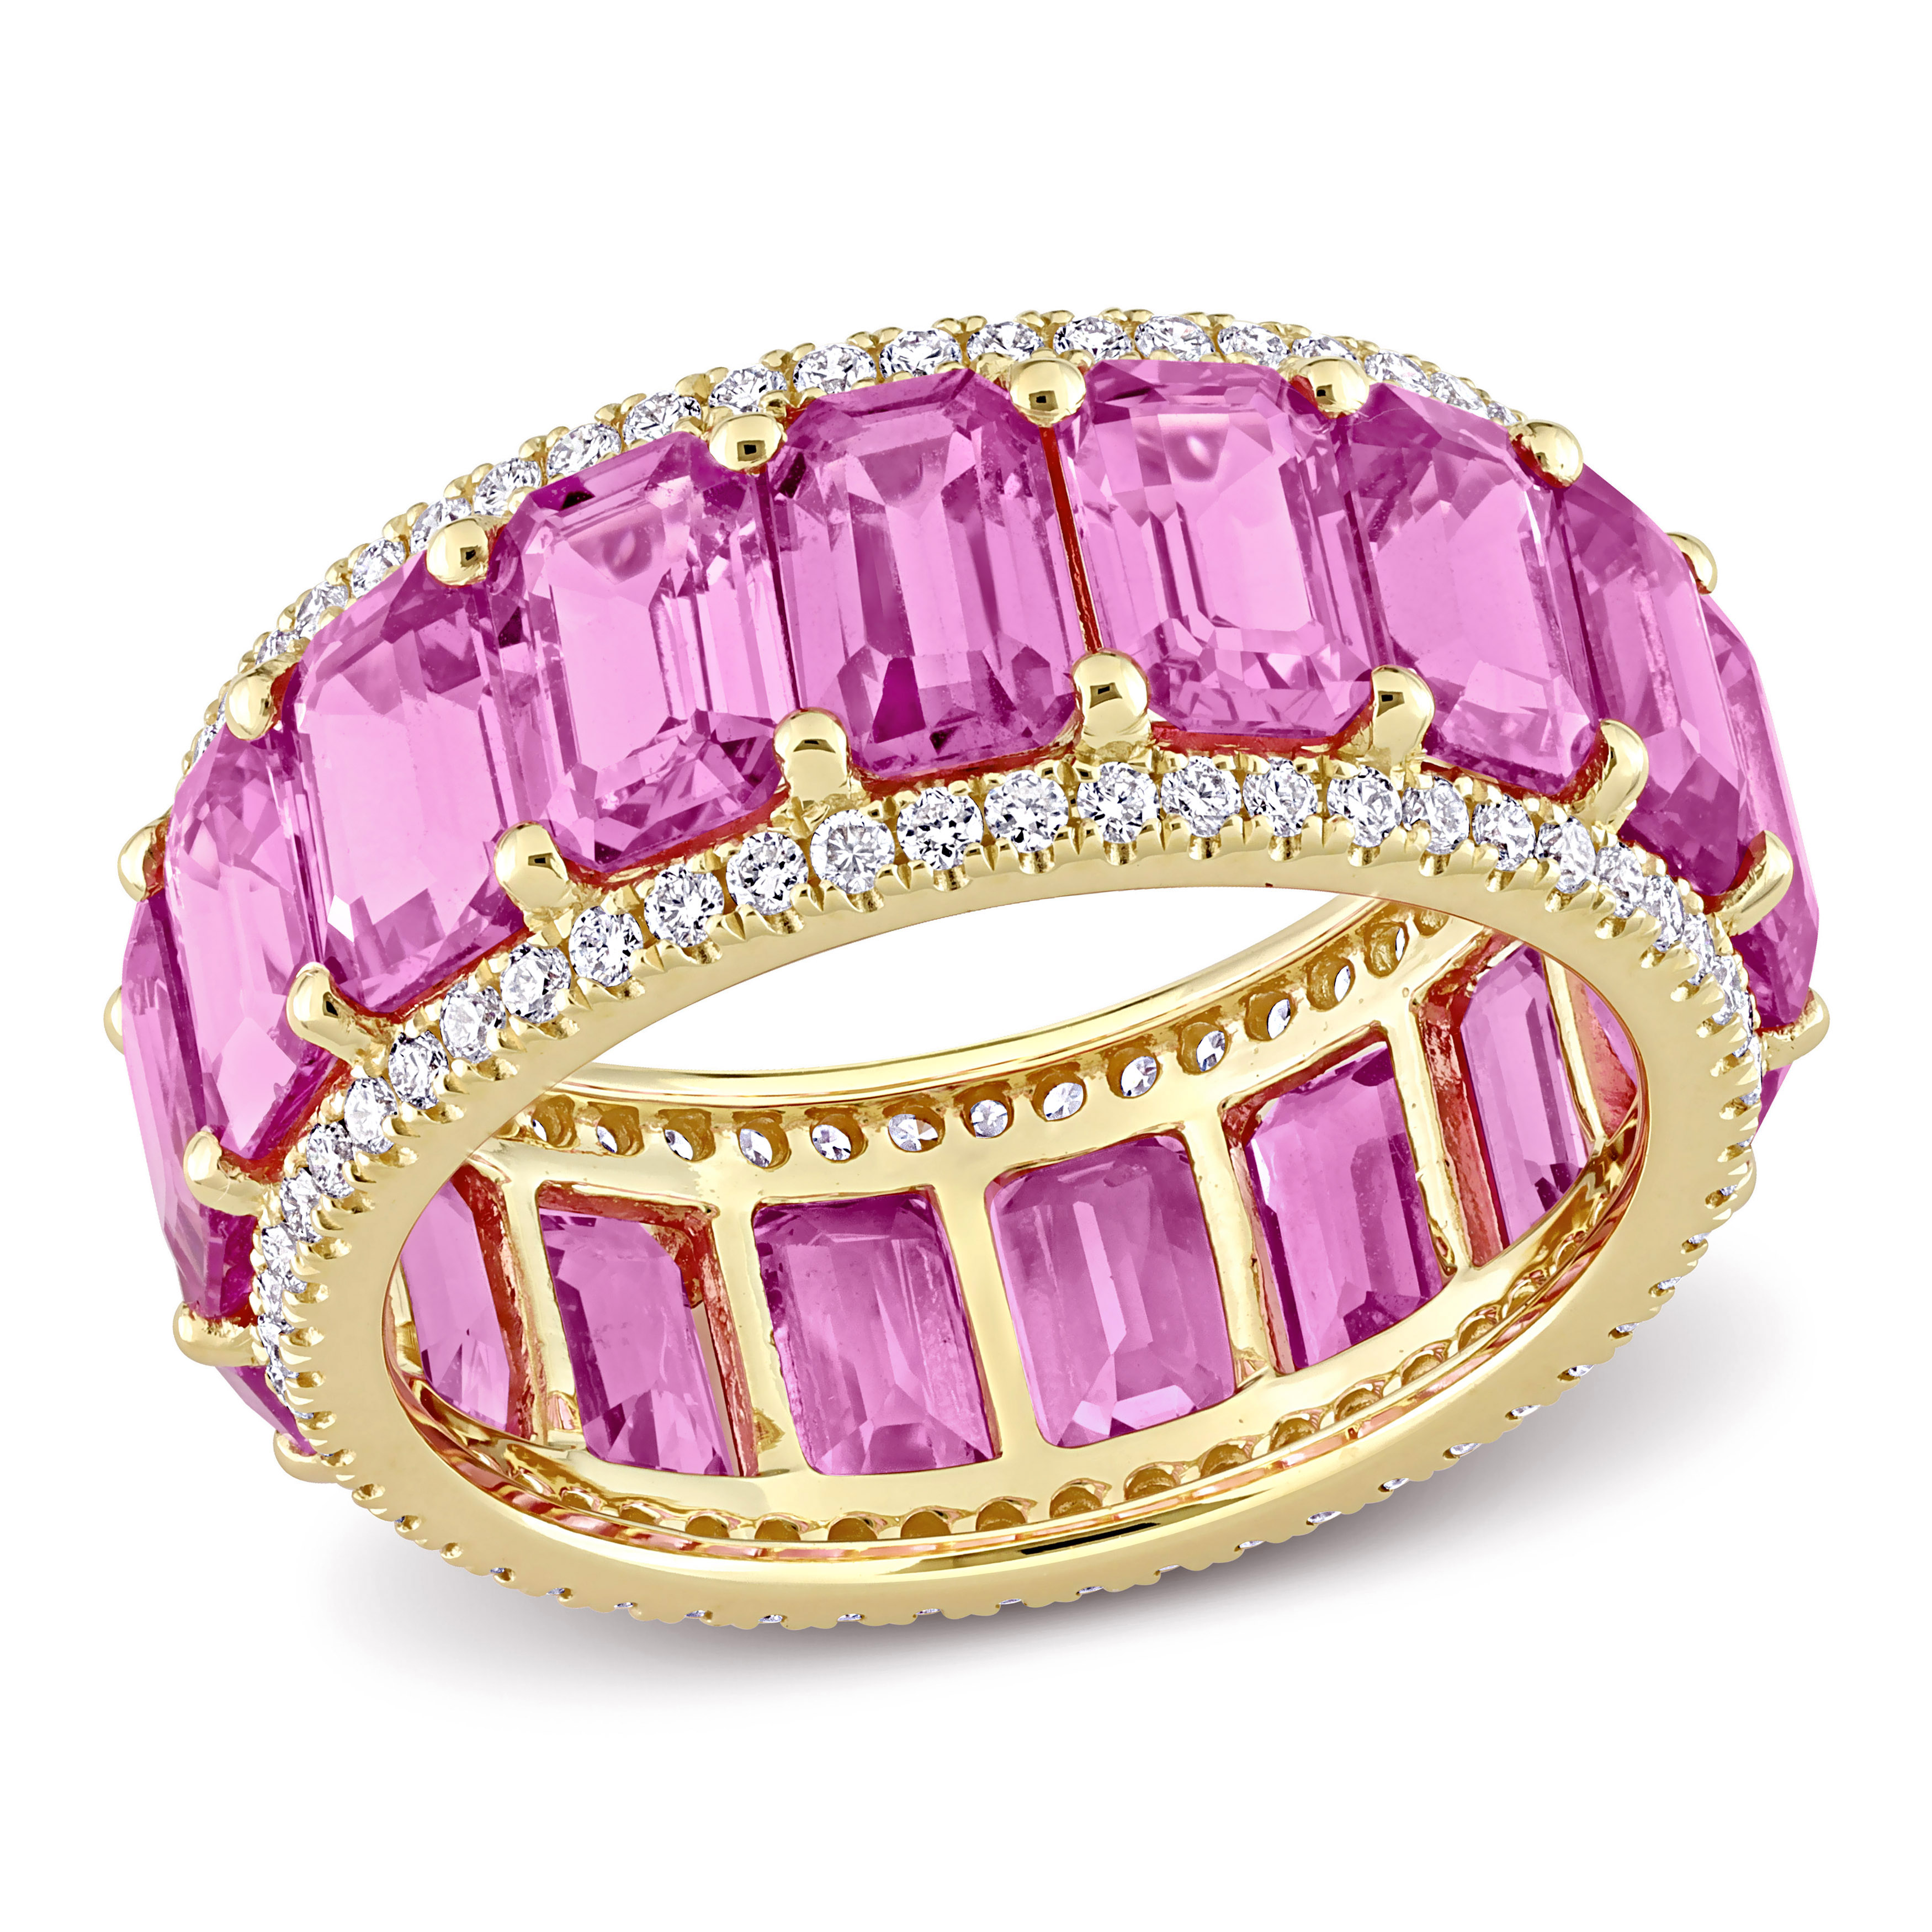 Dark Pink Sapphire and Diamond Eternity Ring in 14k Yellow Gold